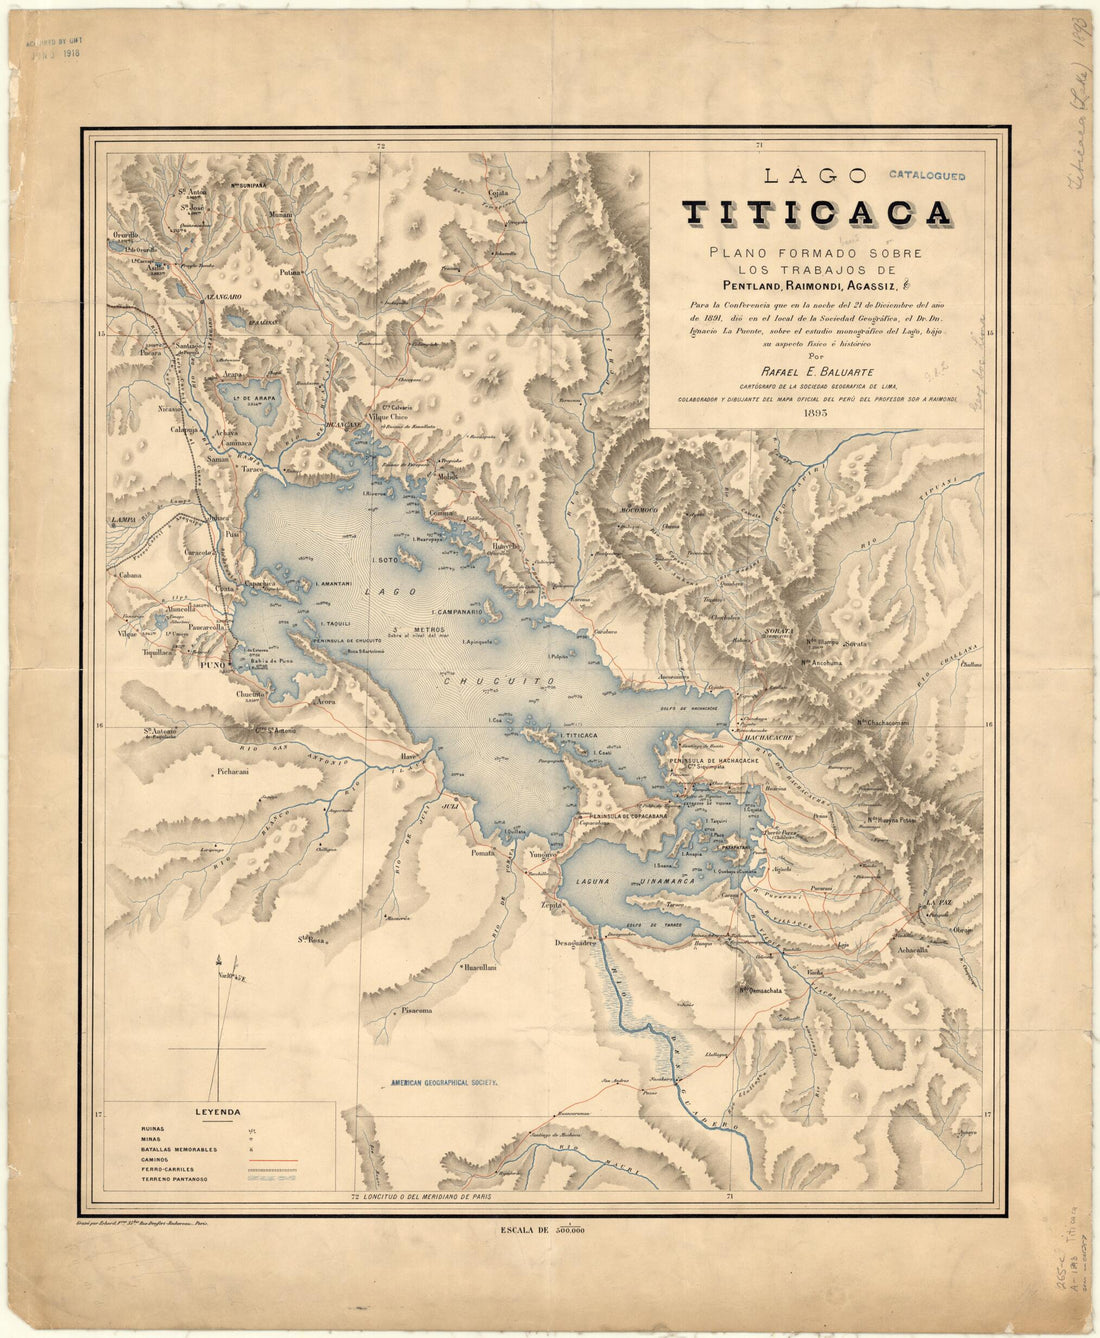 This old map of Lake Titicaca. (Lago Titicaca) from 1893 was created by Rafael E. Baluarte,  Erhard (Firm), D. Ignacio La Puente in 1893